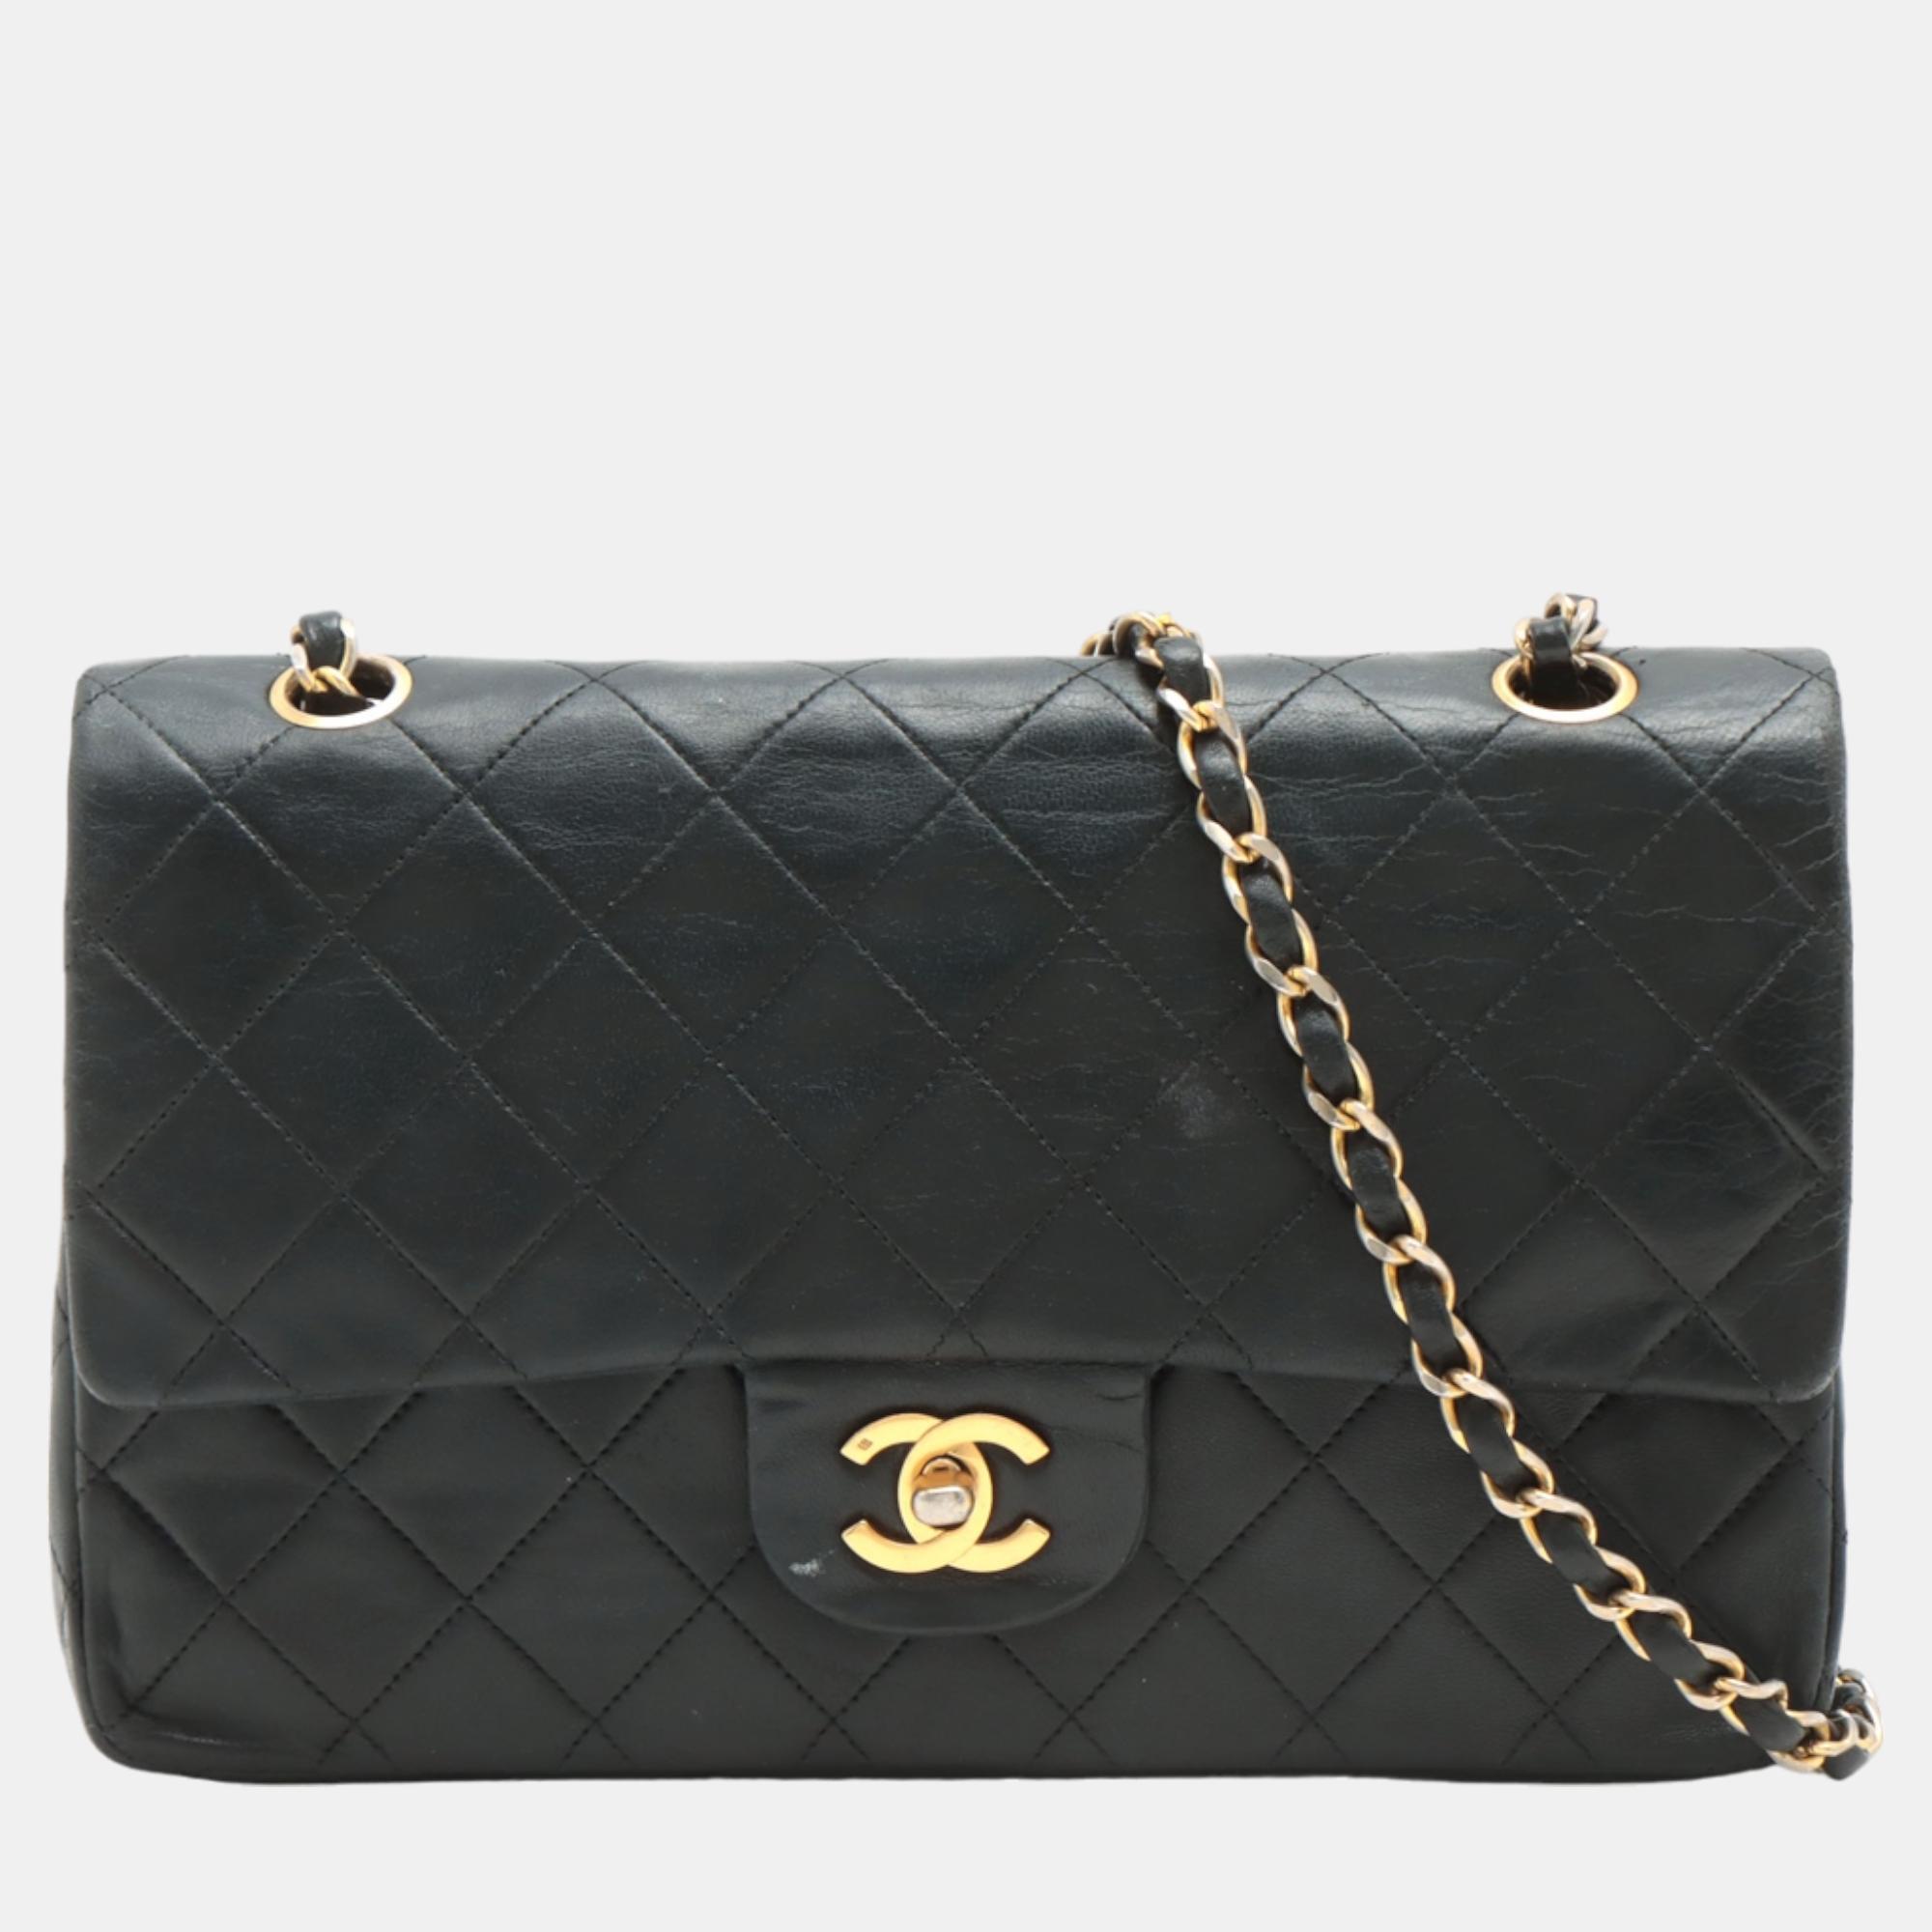 Chanel black leather medium classic double flap shoulder bags